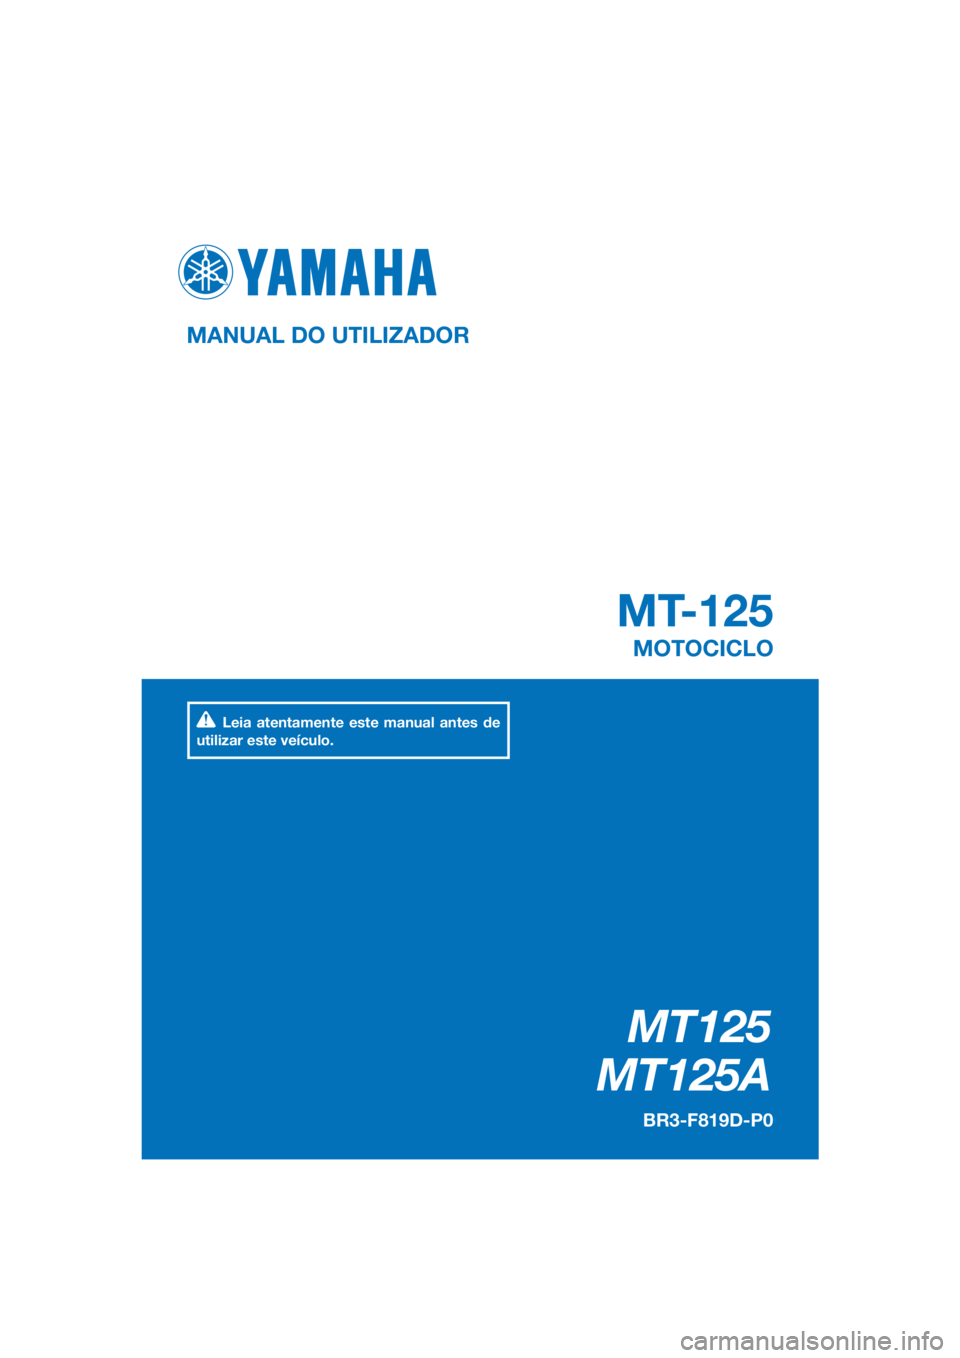 YAMAHA MT-125 2016  Manual de utilização (in Portuguese) PANTONE285C
MT125
MT125A
MT-125
MANUAL DO UTILIZADOR
BR3-F819D-P0
MOTOCICLO
Leia atentamente este manual antes de 
utilizar este veículo.
[Portuguese  (P)] 